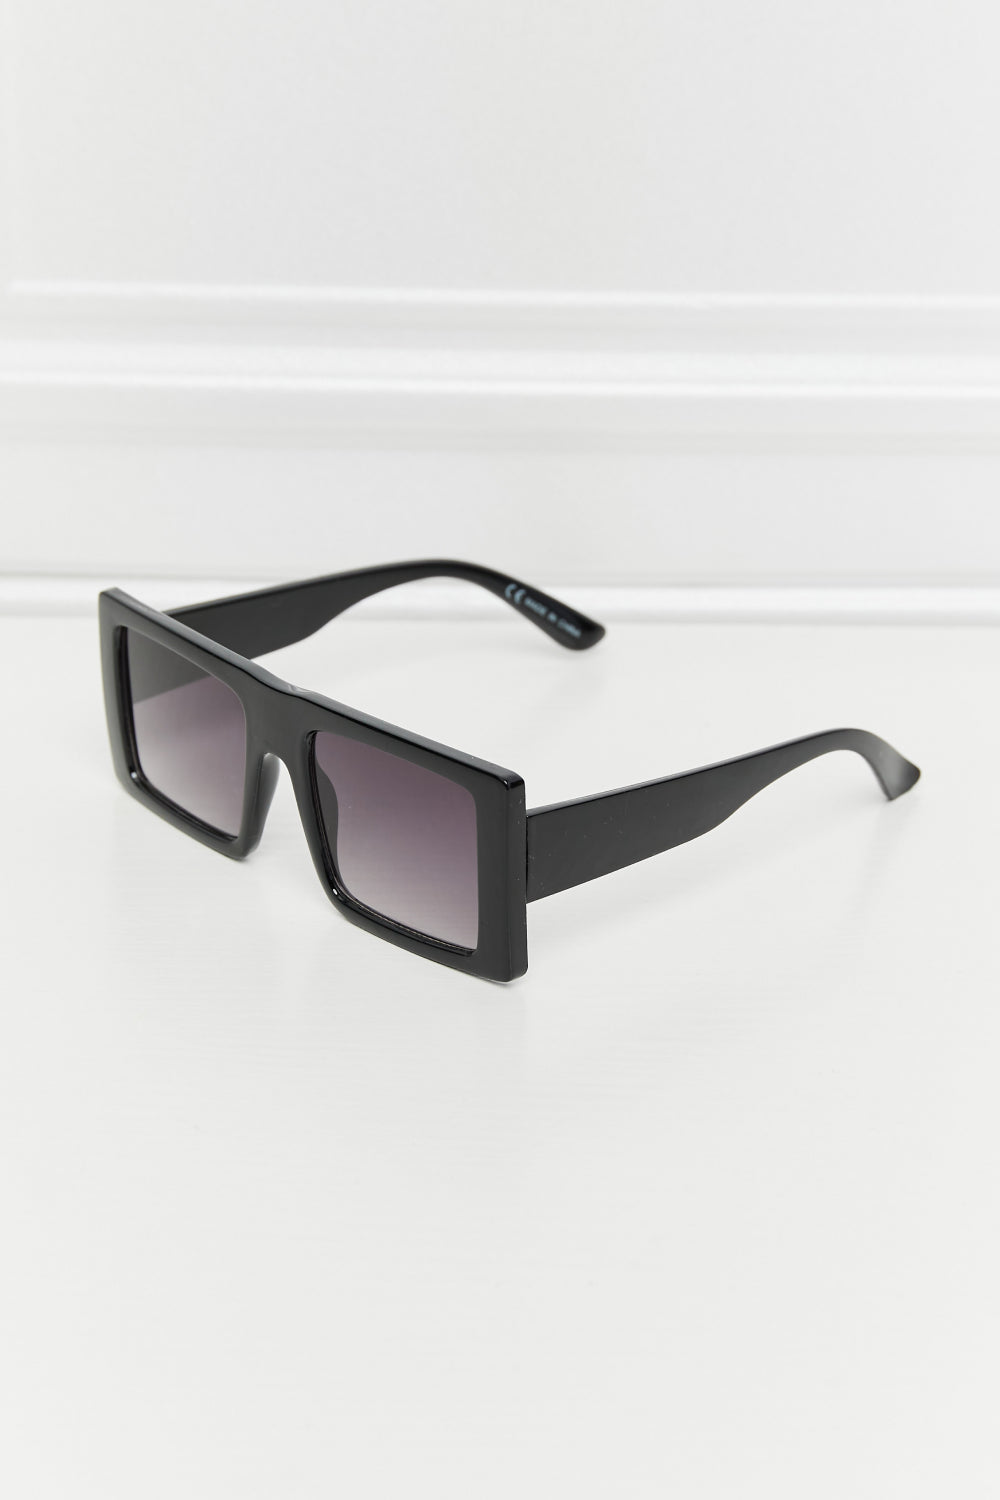 Lavender Square Polycarbonate Sunglasses Accessories